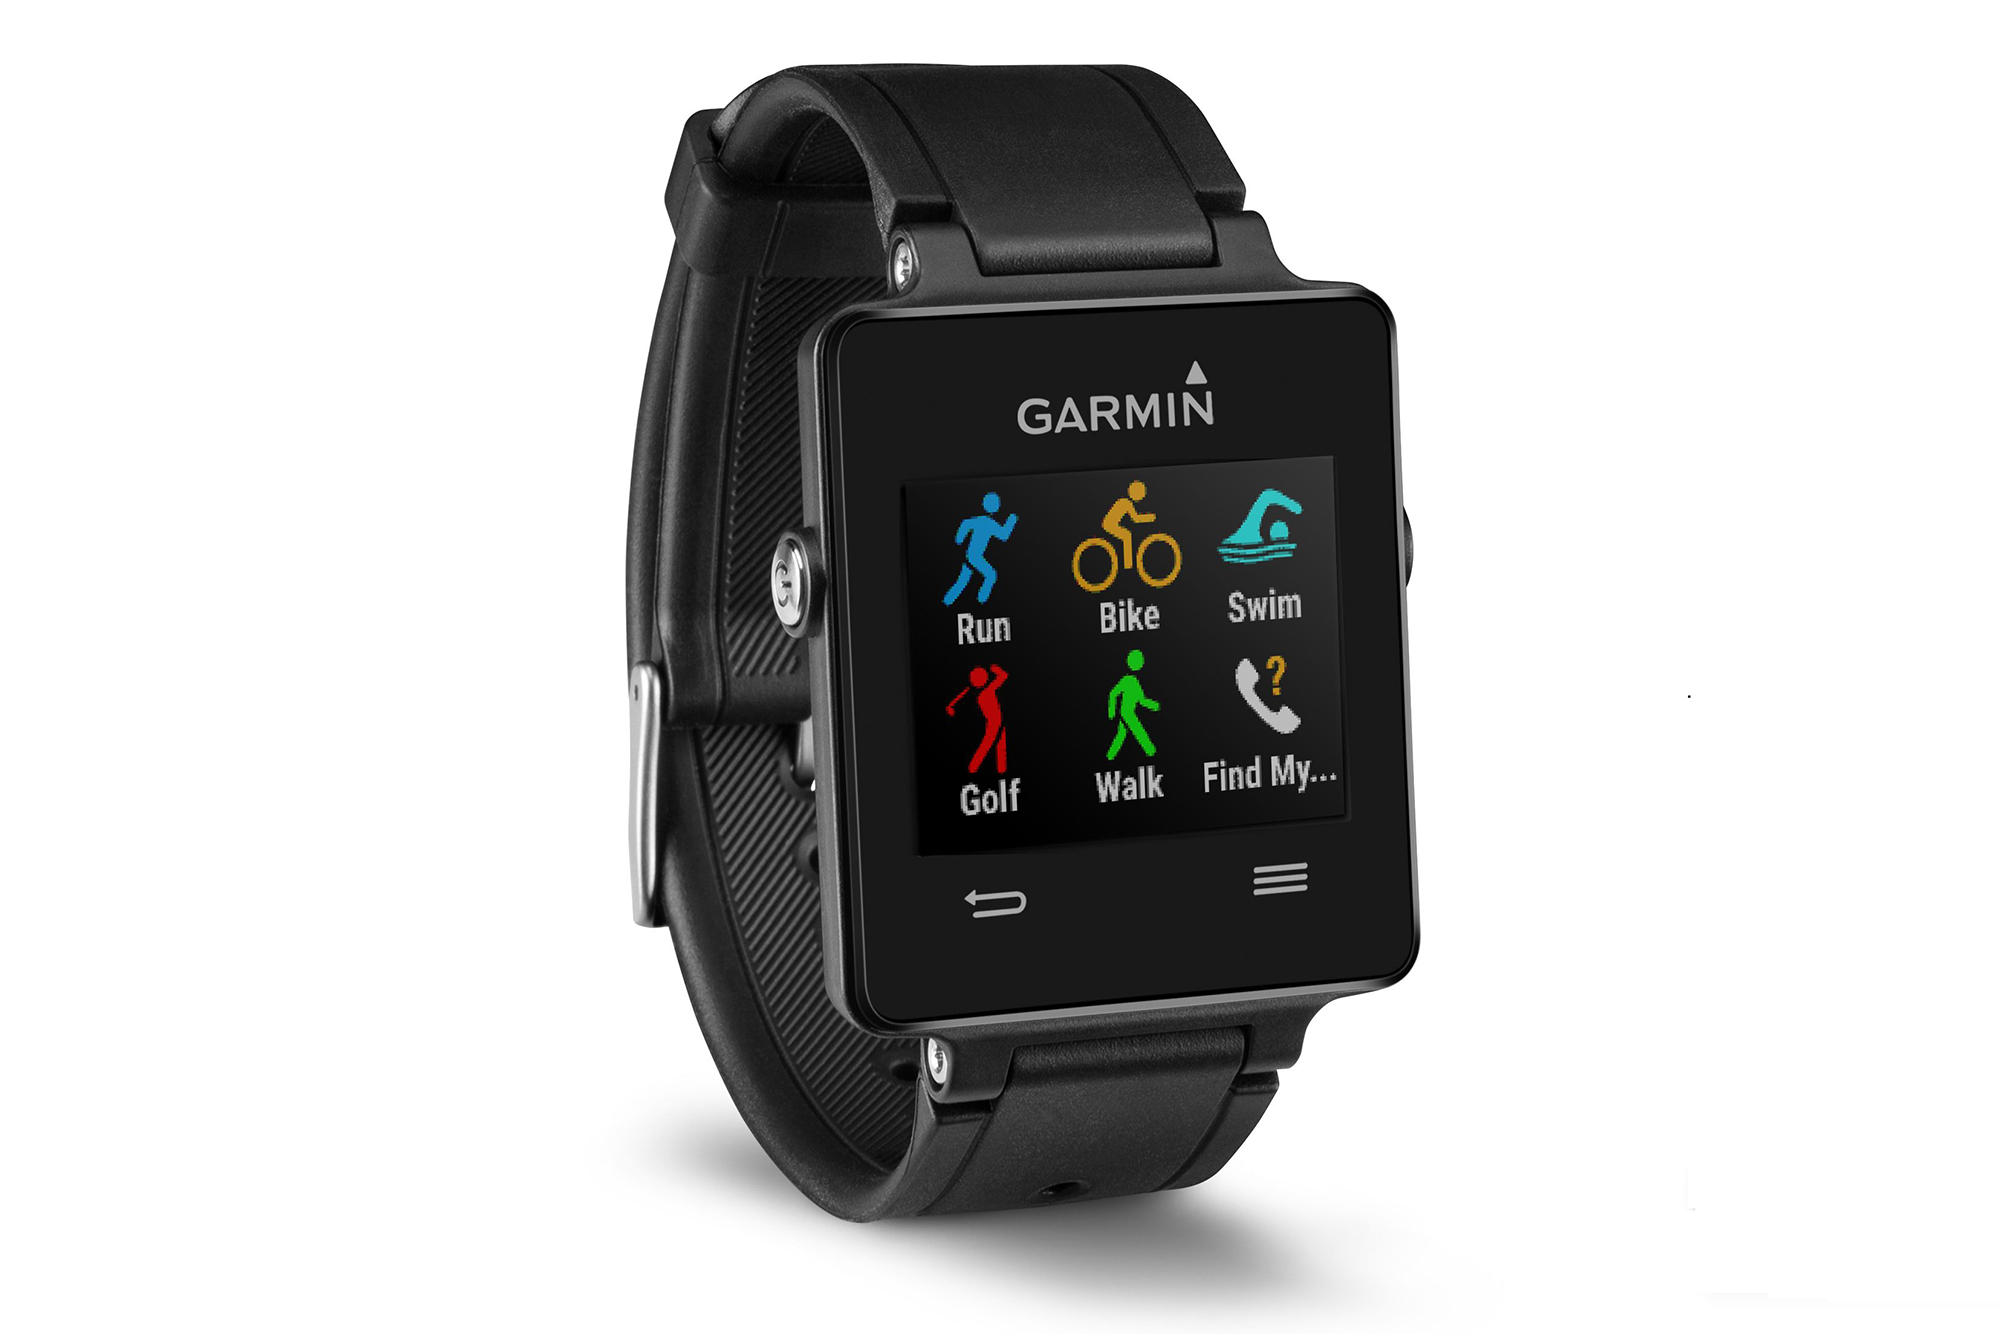 Garmin's vivoactive GPS watch offers a wealth of multisport features